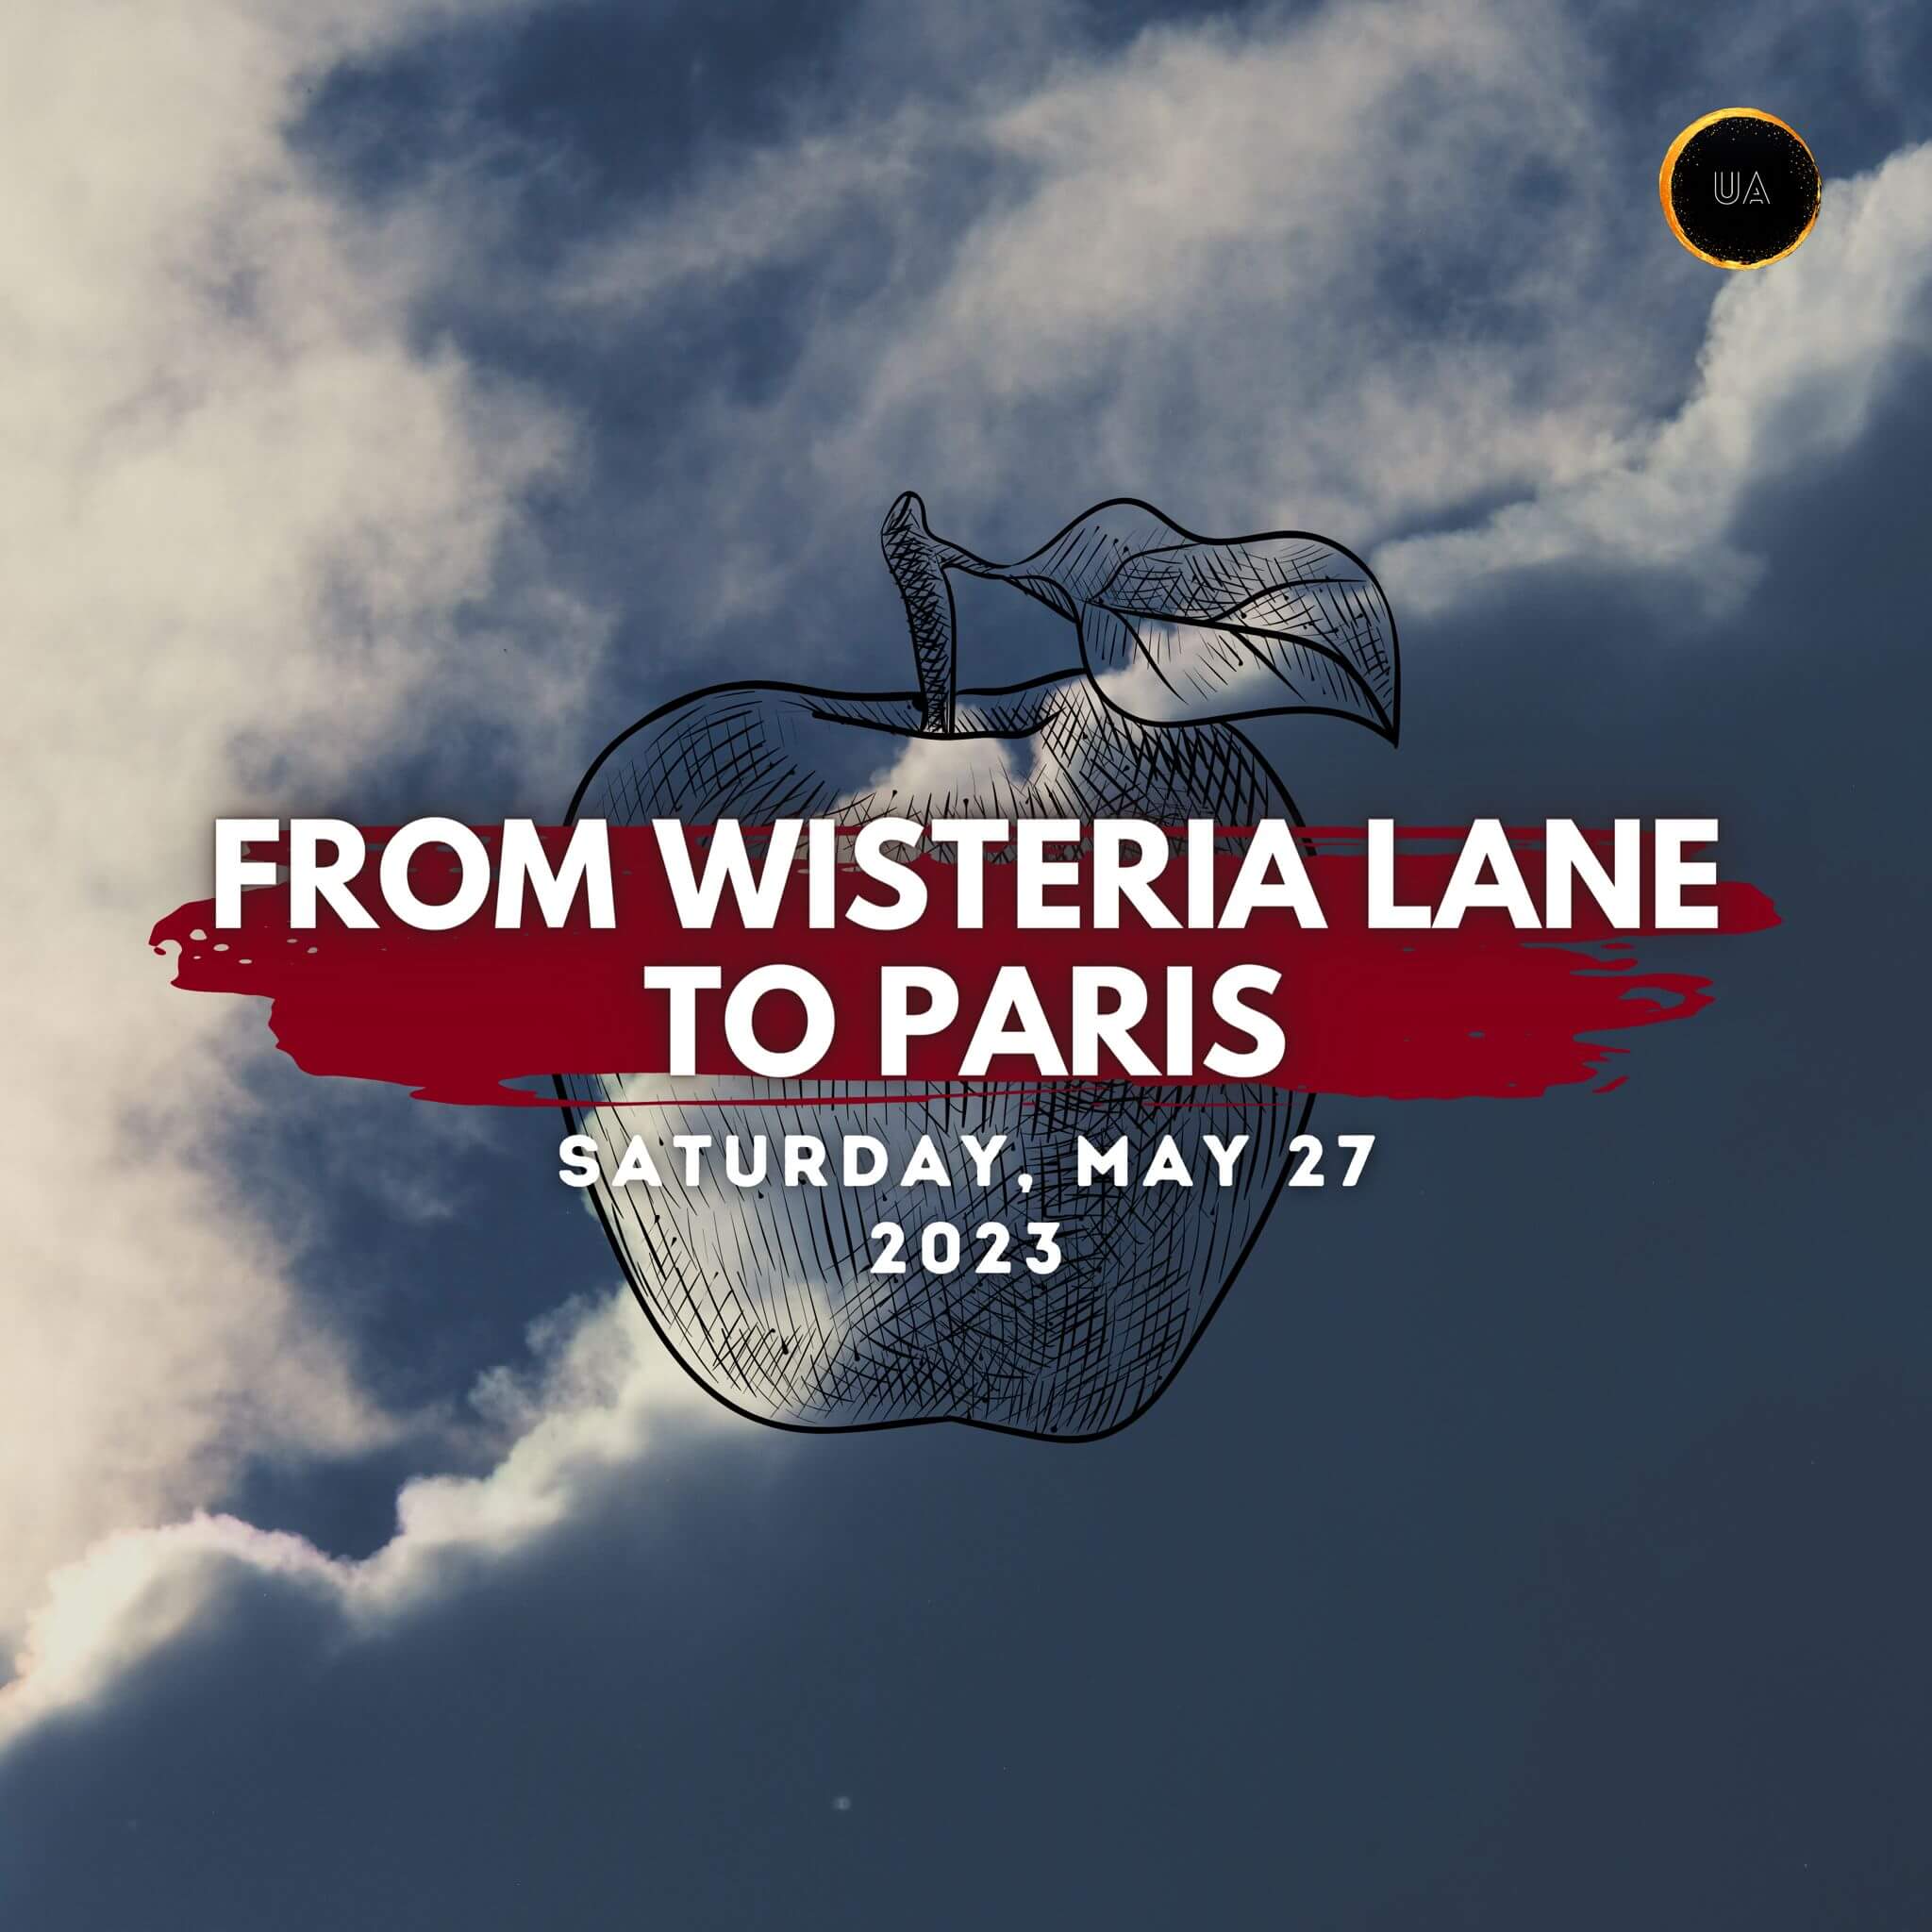 From Wisteria Lane to Paris